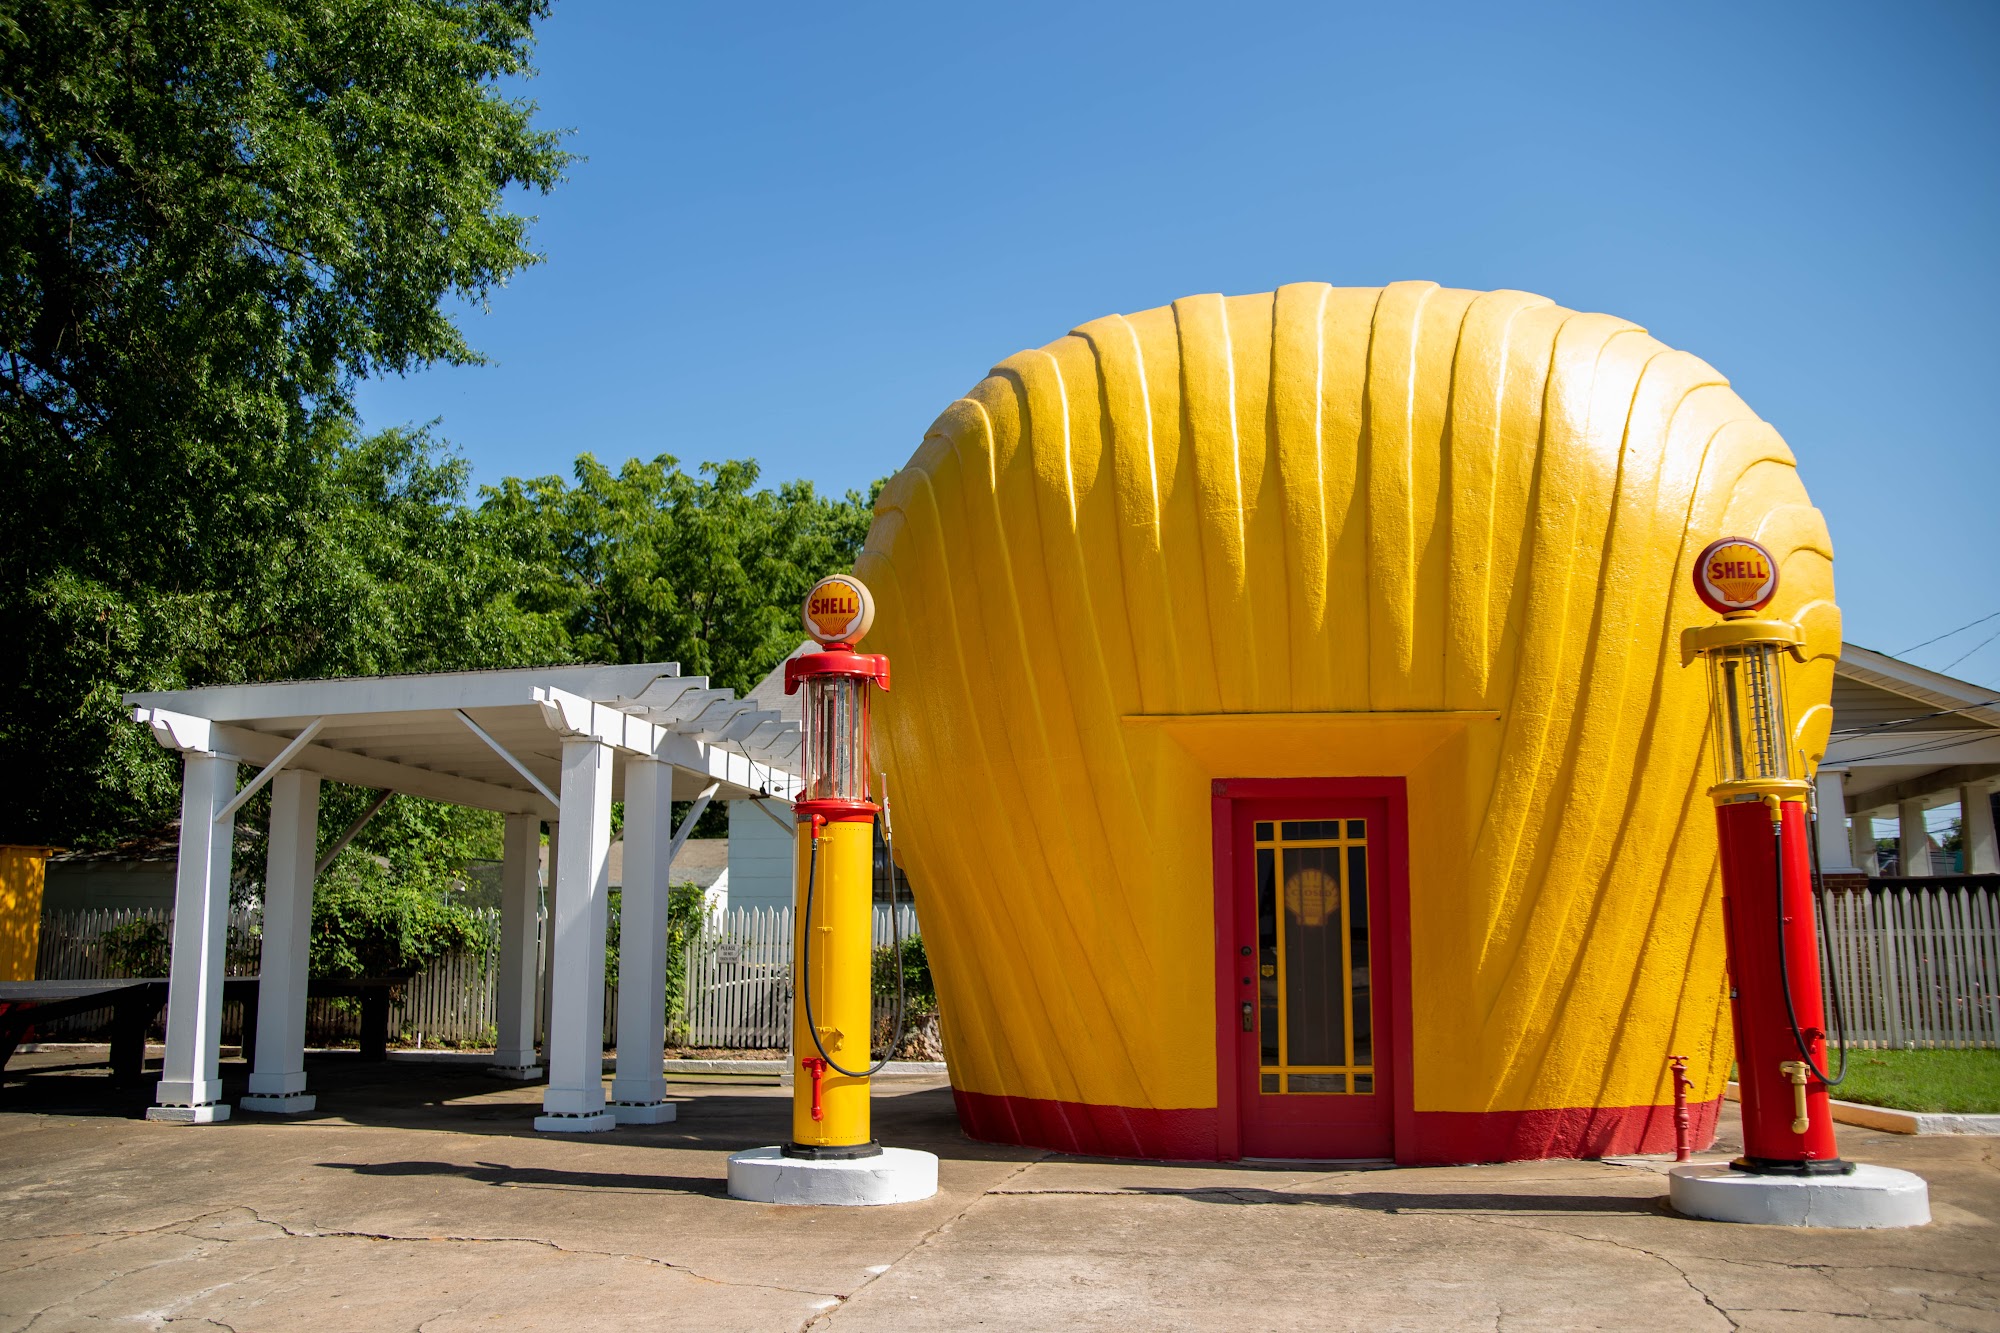 Shell-Shaped Shell Station (Historic Landmark)